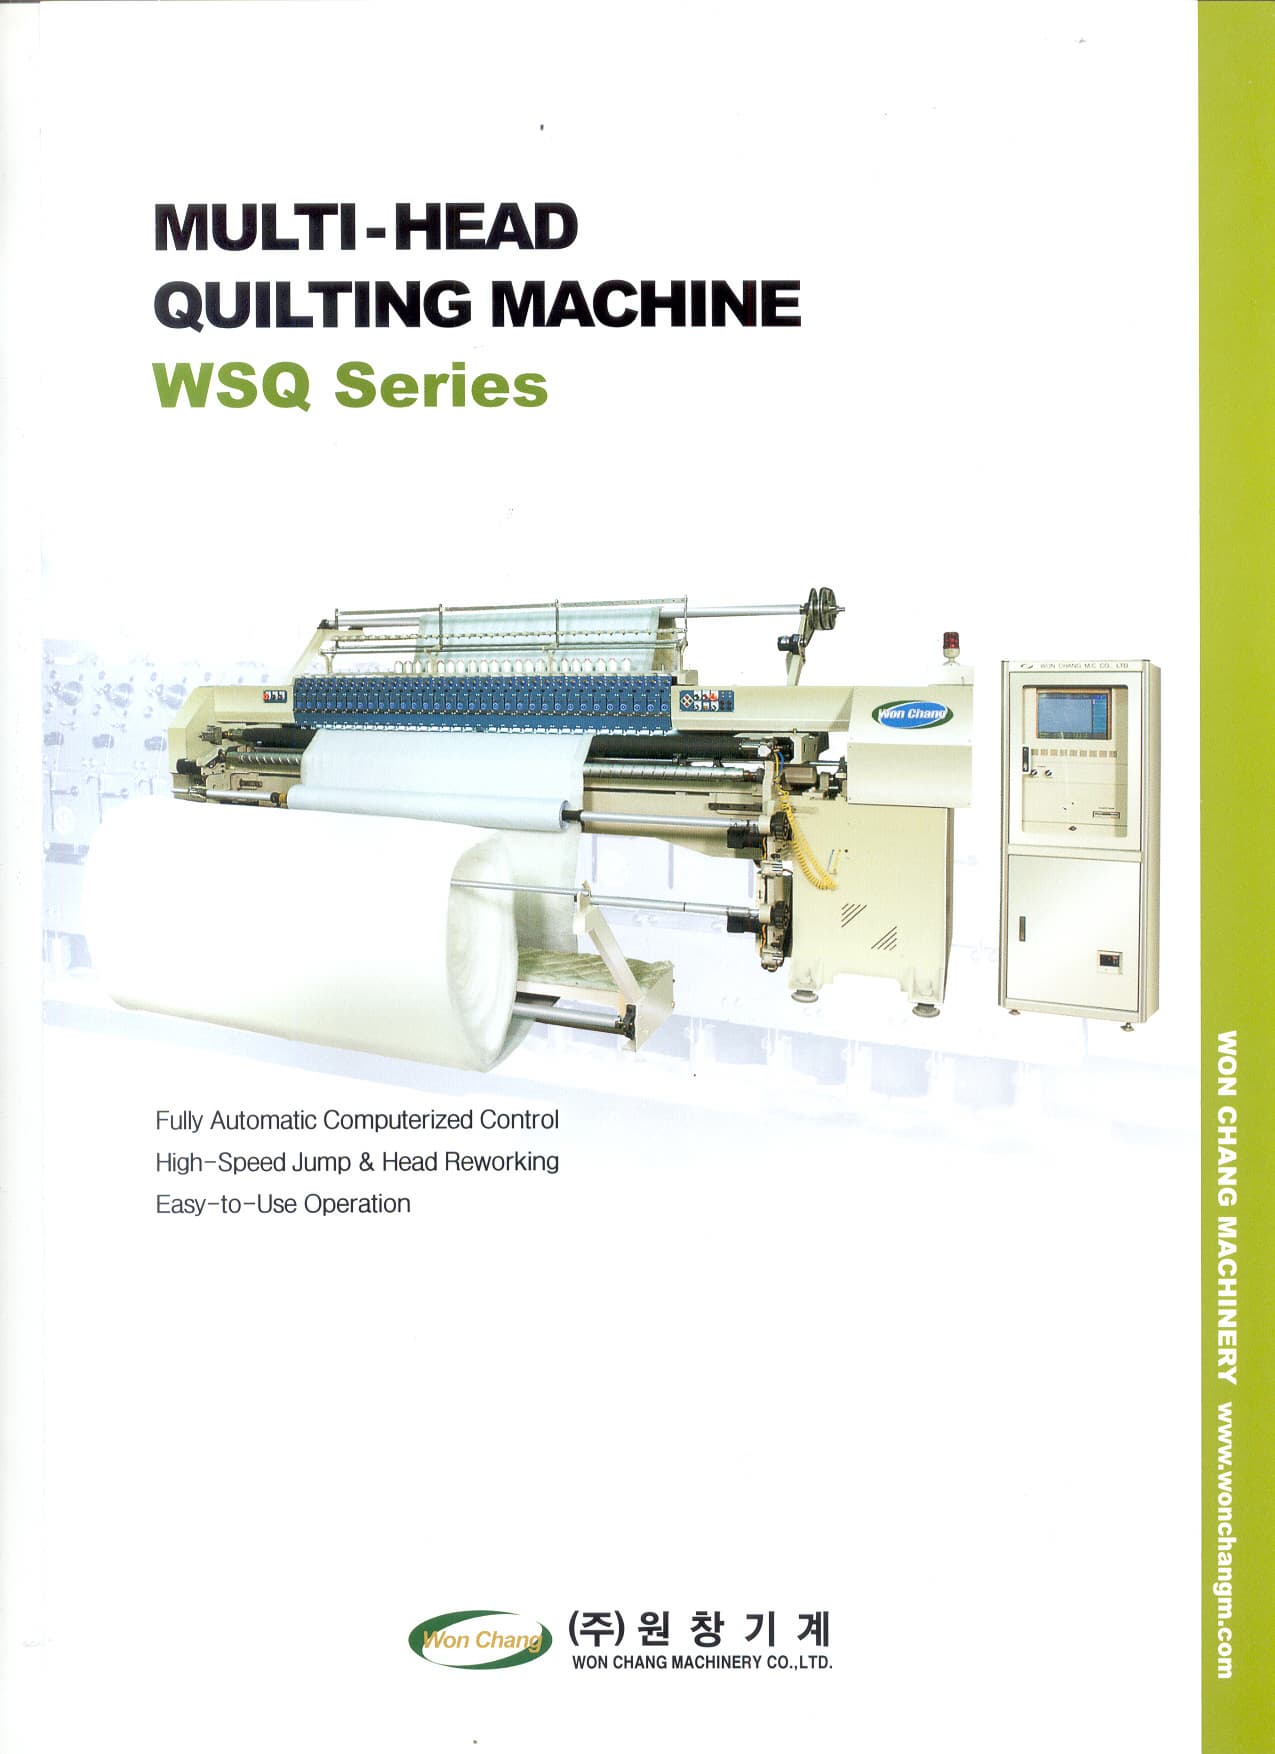 Quilting Machinery